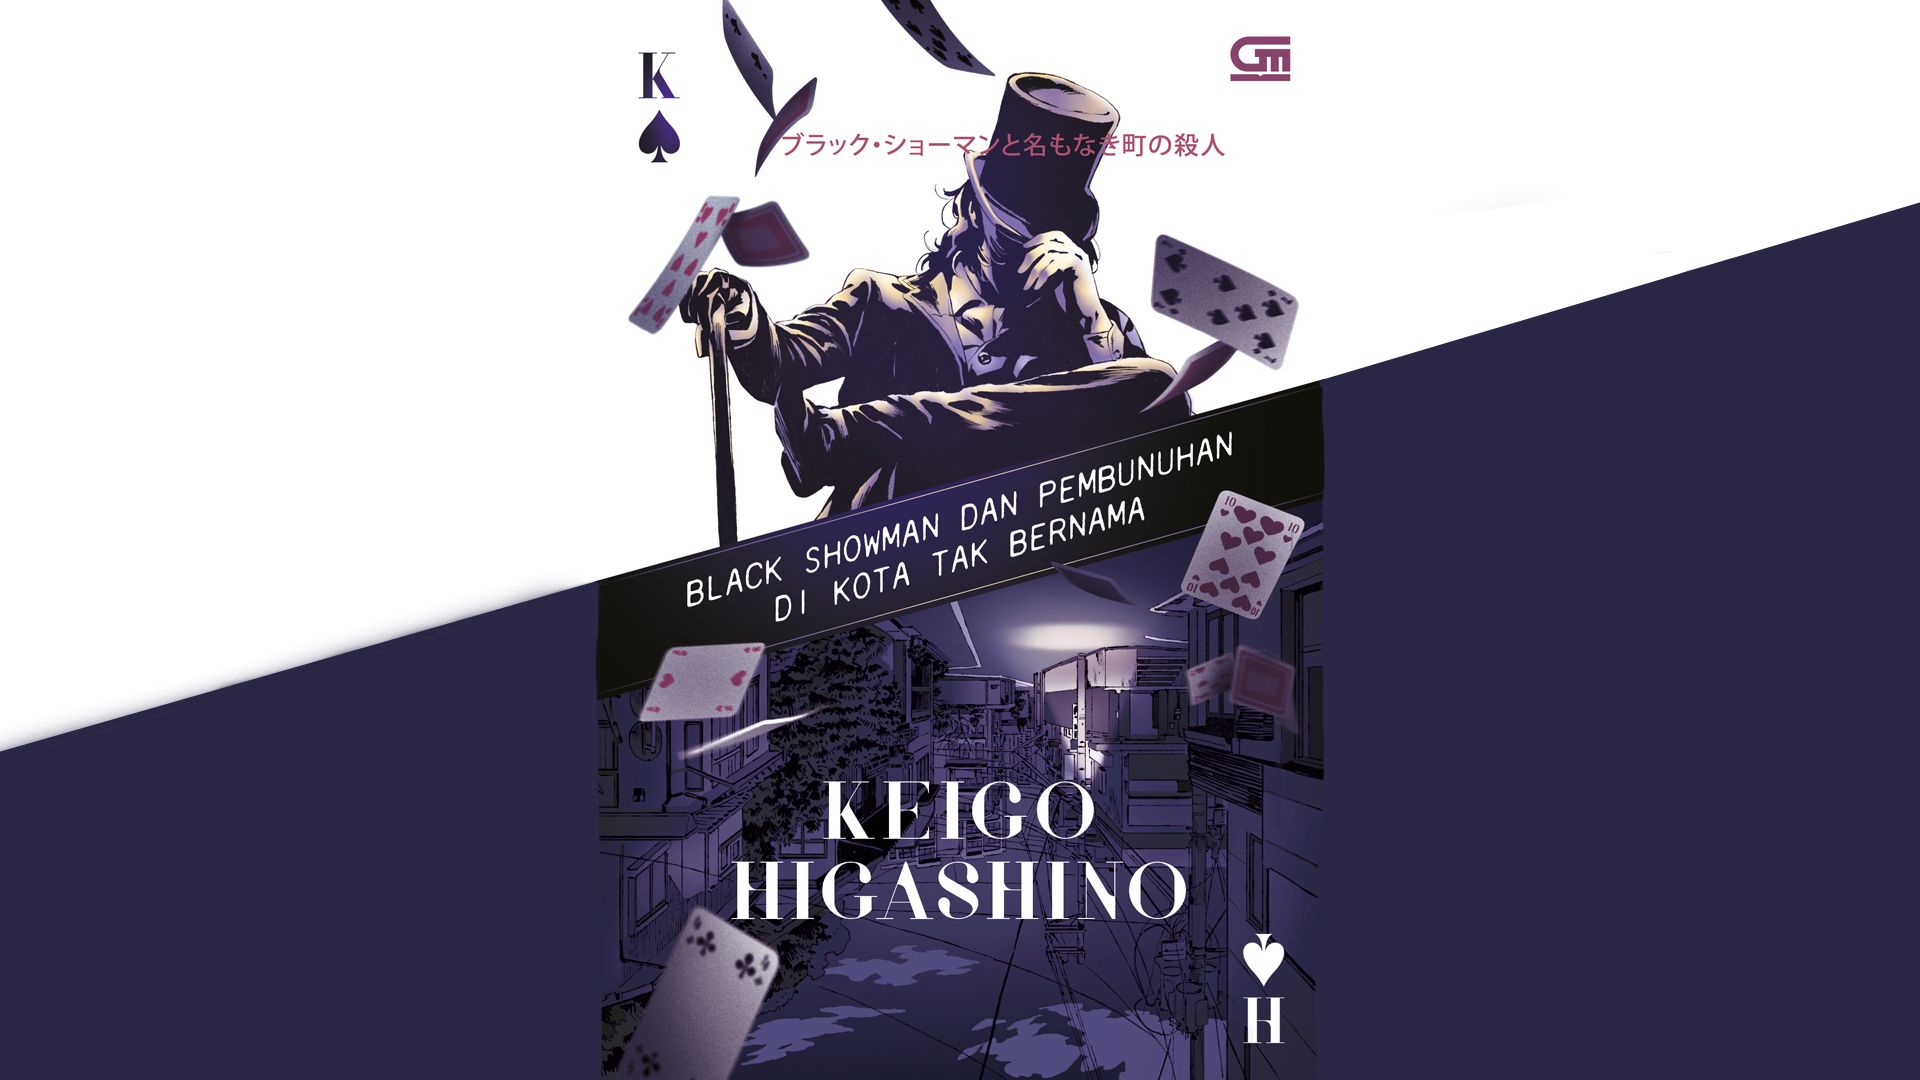 Novel Misteri Detektif Terbaru Keigo Higashino Siap Dipecahkan!